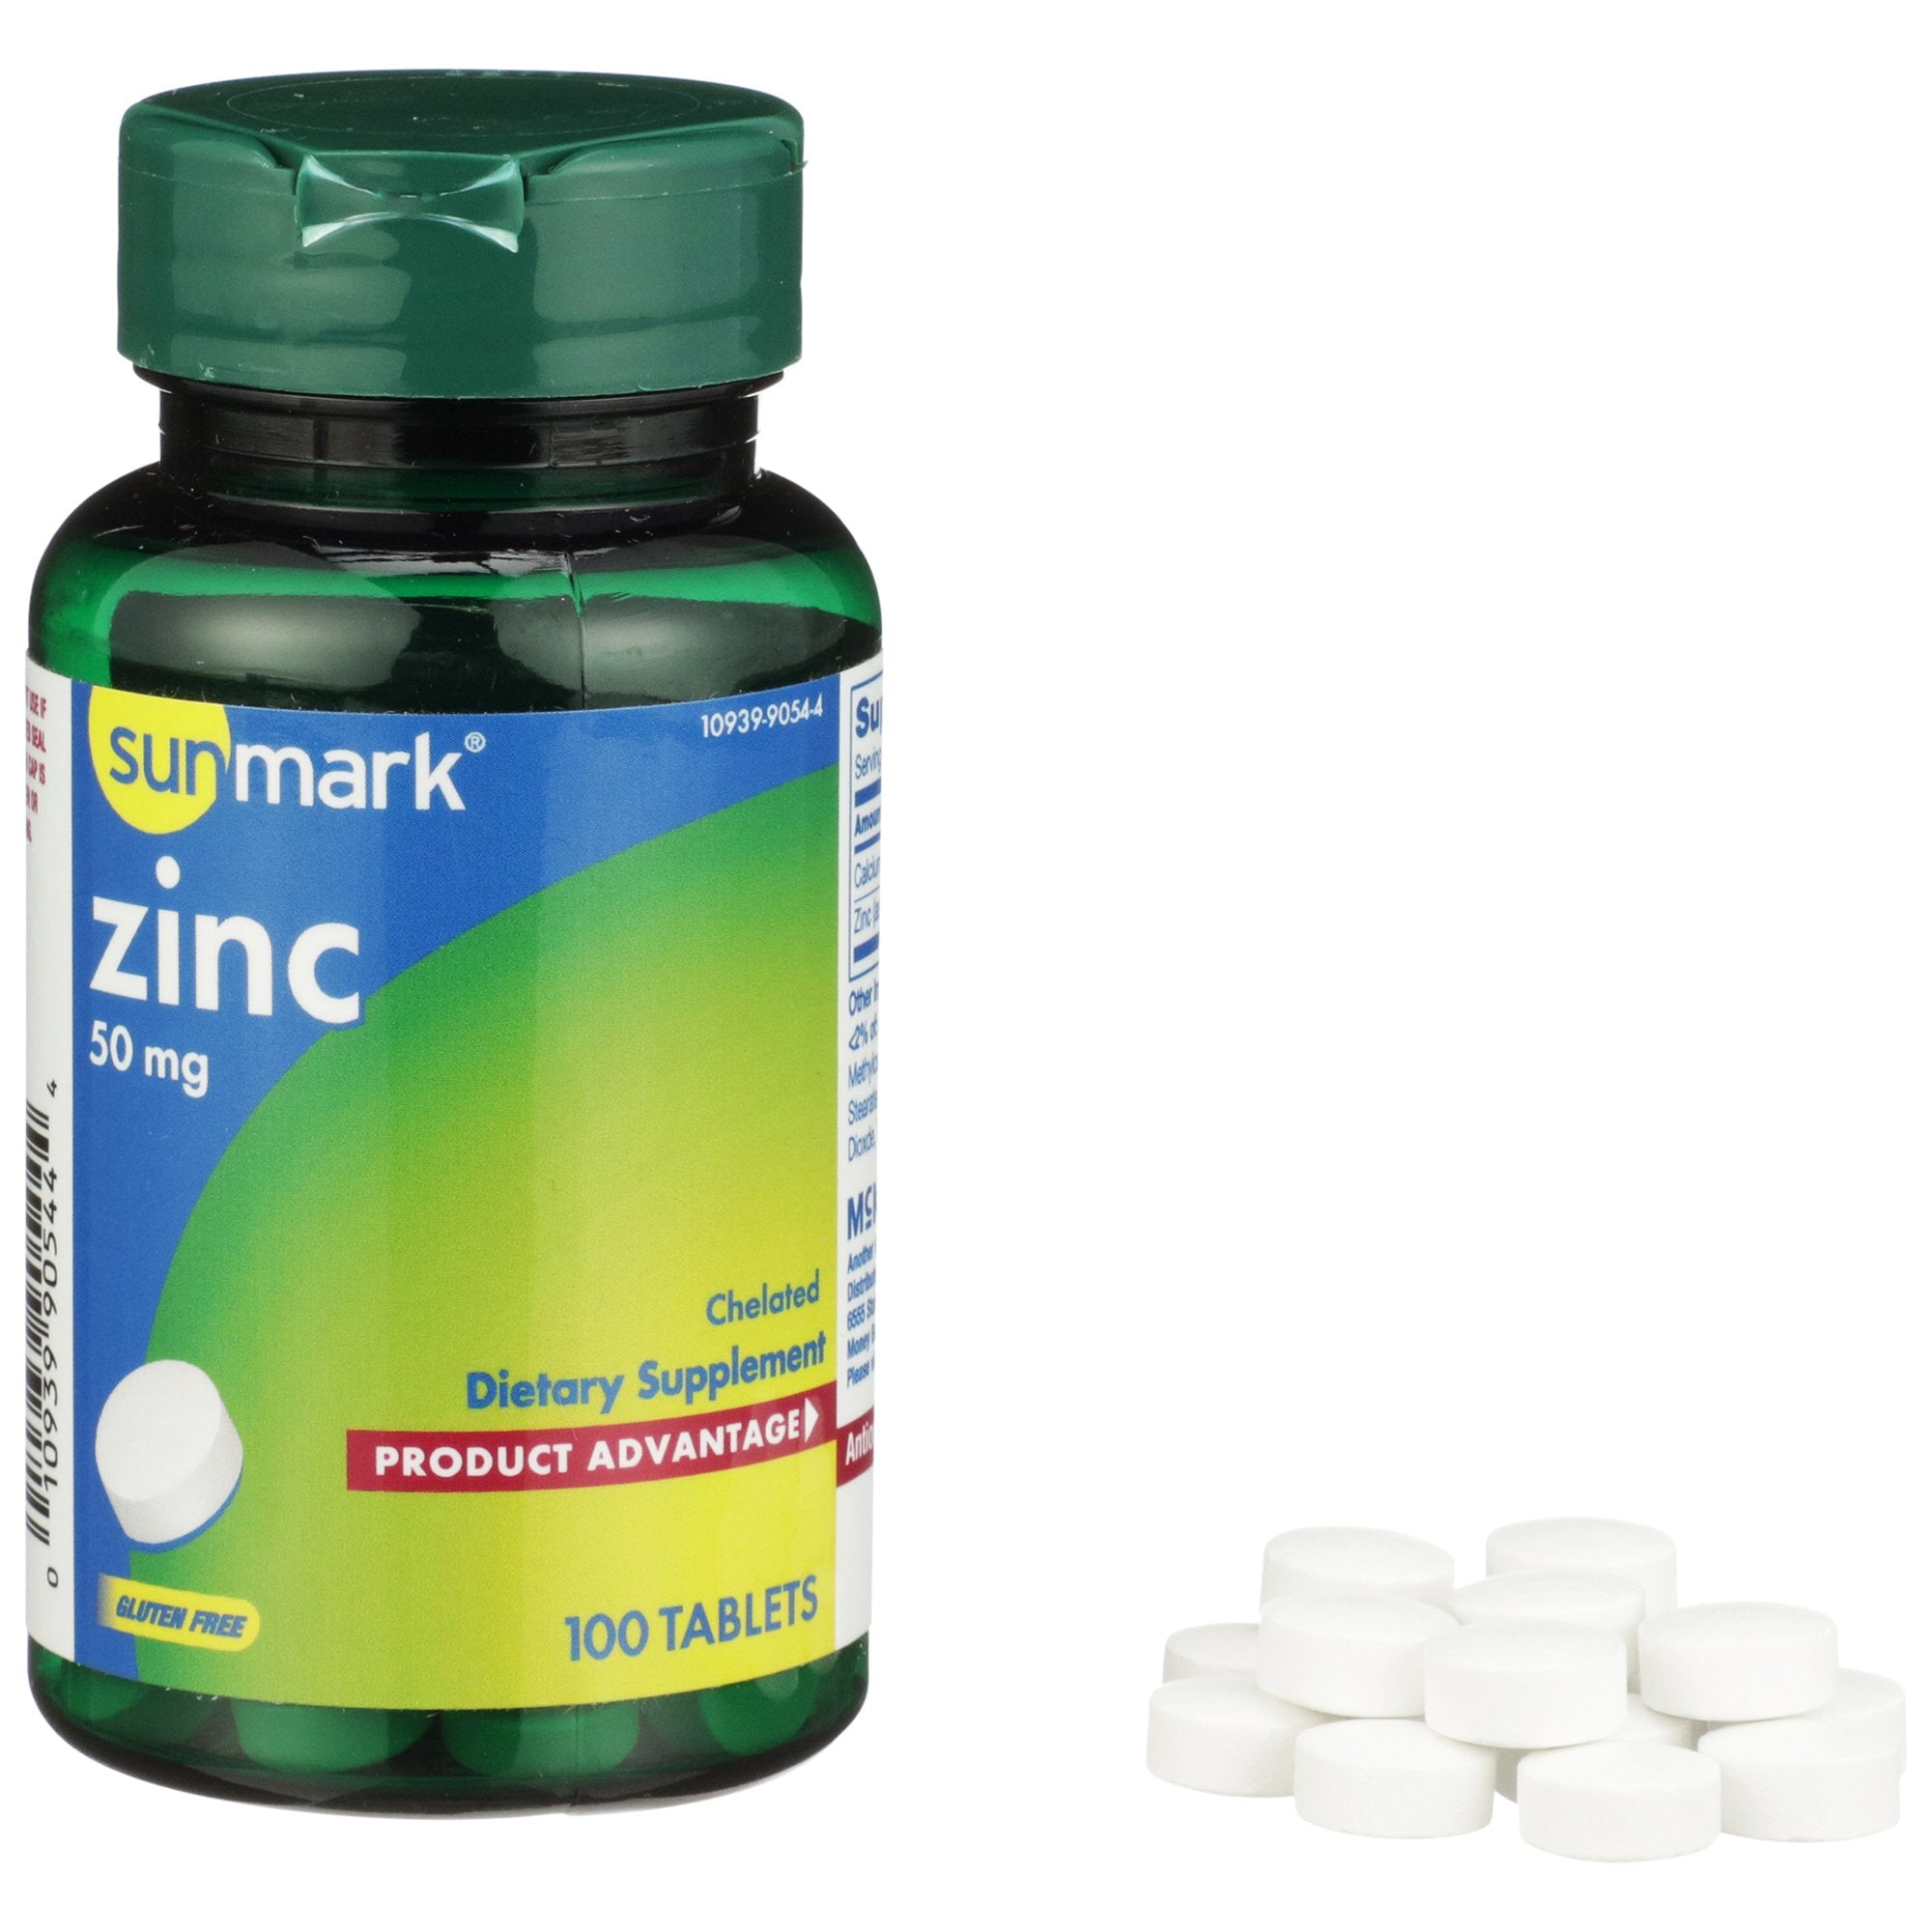 Mineral Supplement sunmark Zinc Gluconate 50 mg Strength Tablet 100 per Bottle Unflavored